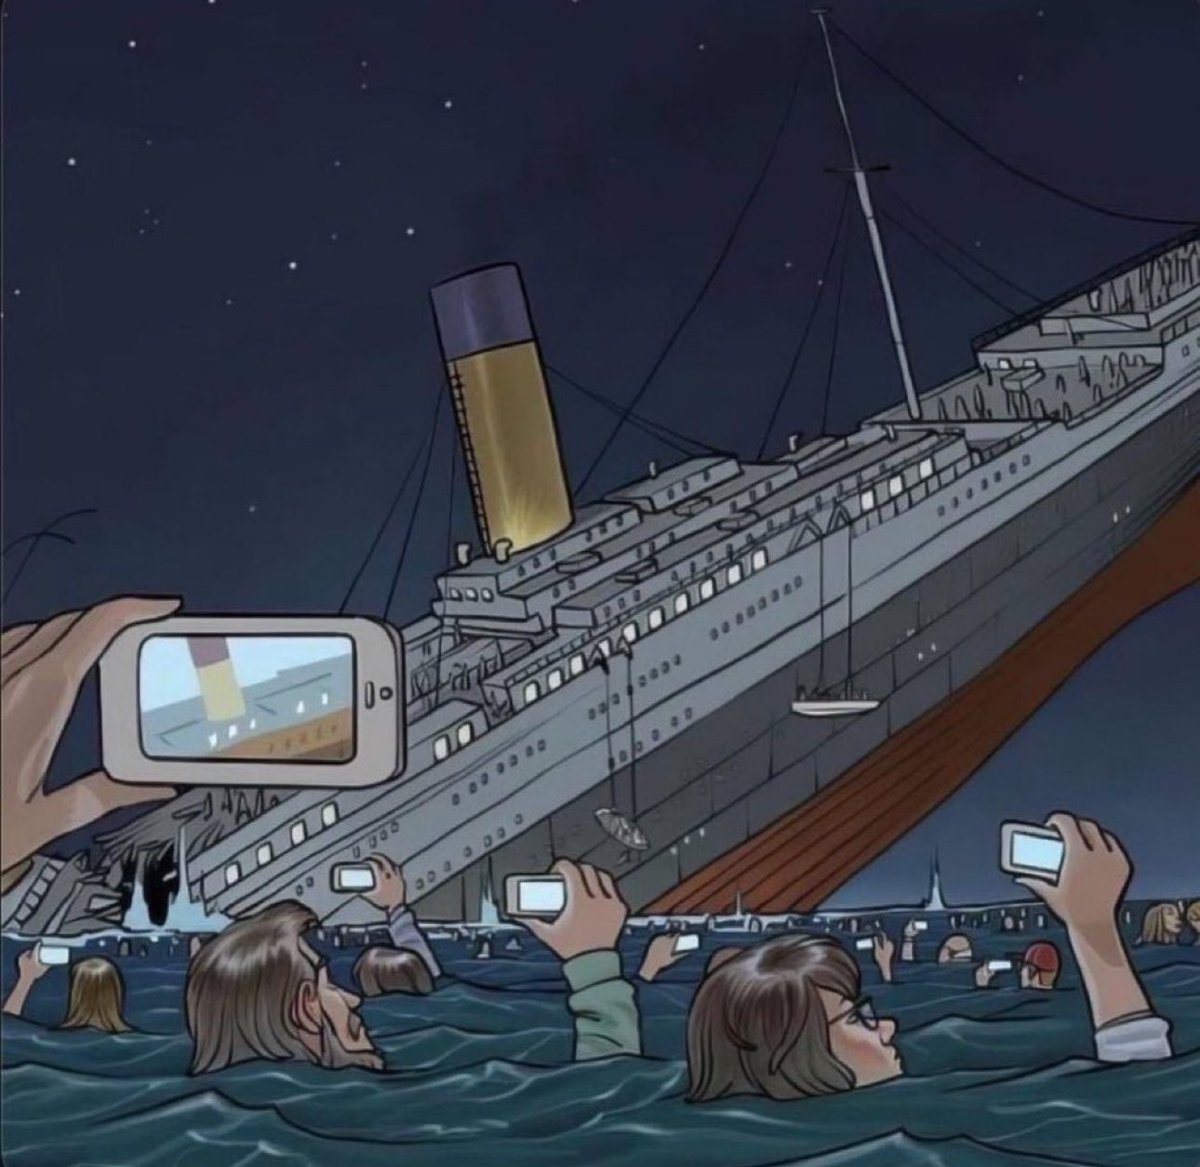 @Morbidful If Titanic were to happen nowadays